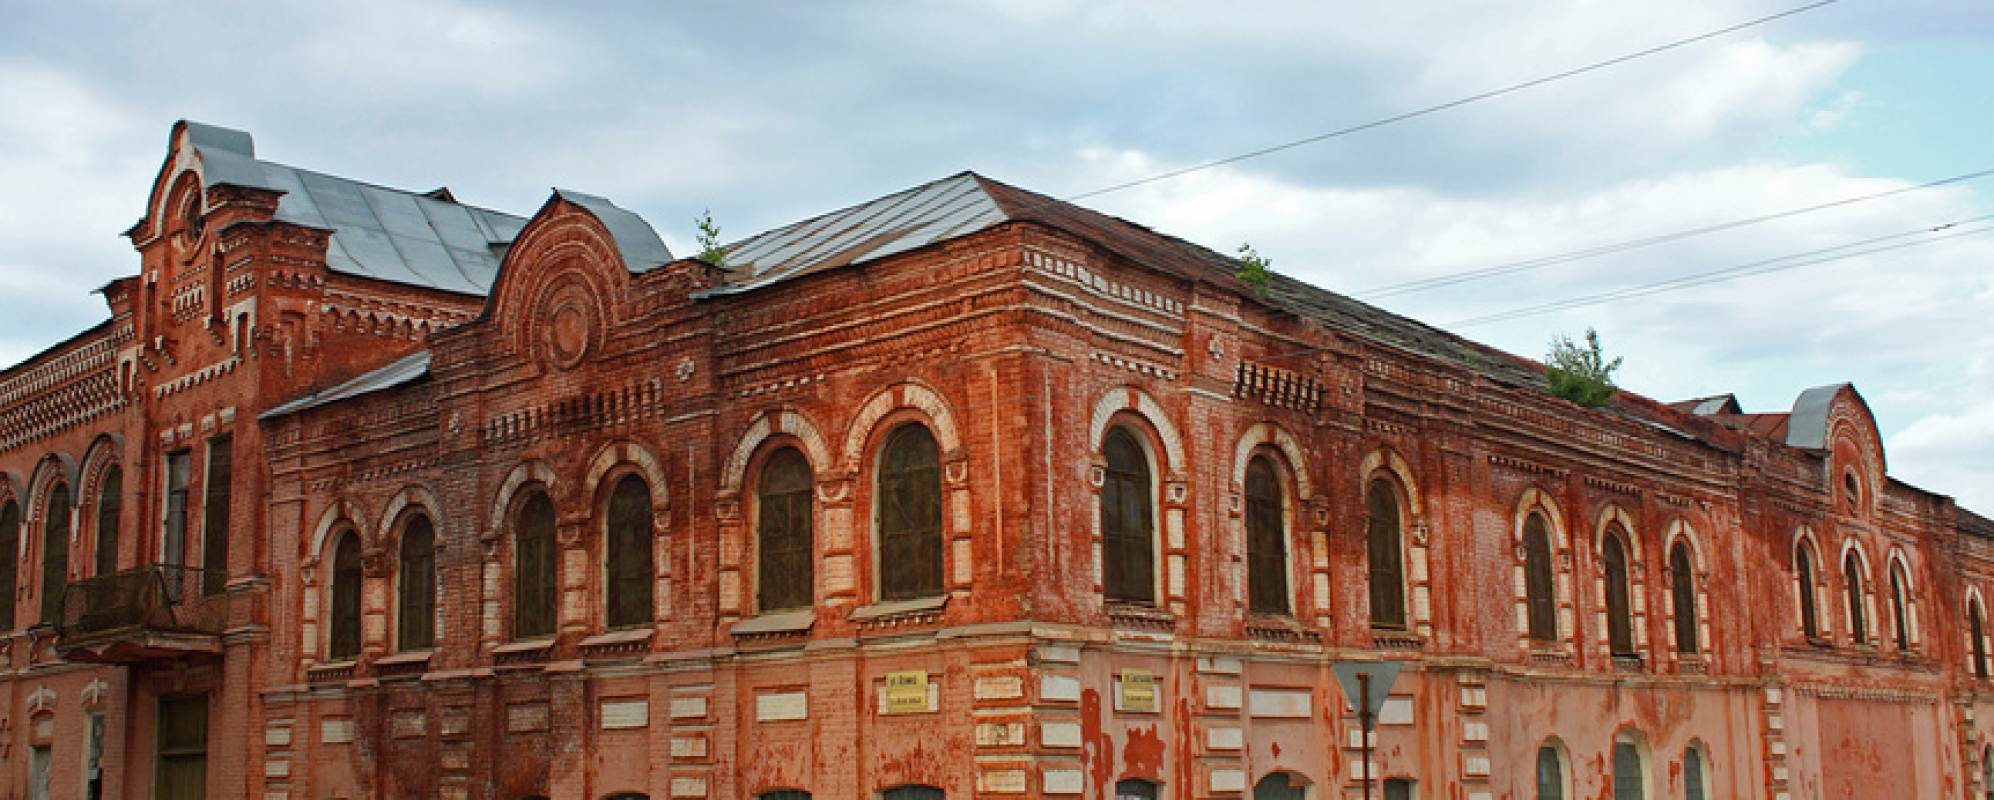 Фотографии памятника архитектуры Табачная Фабрика